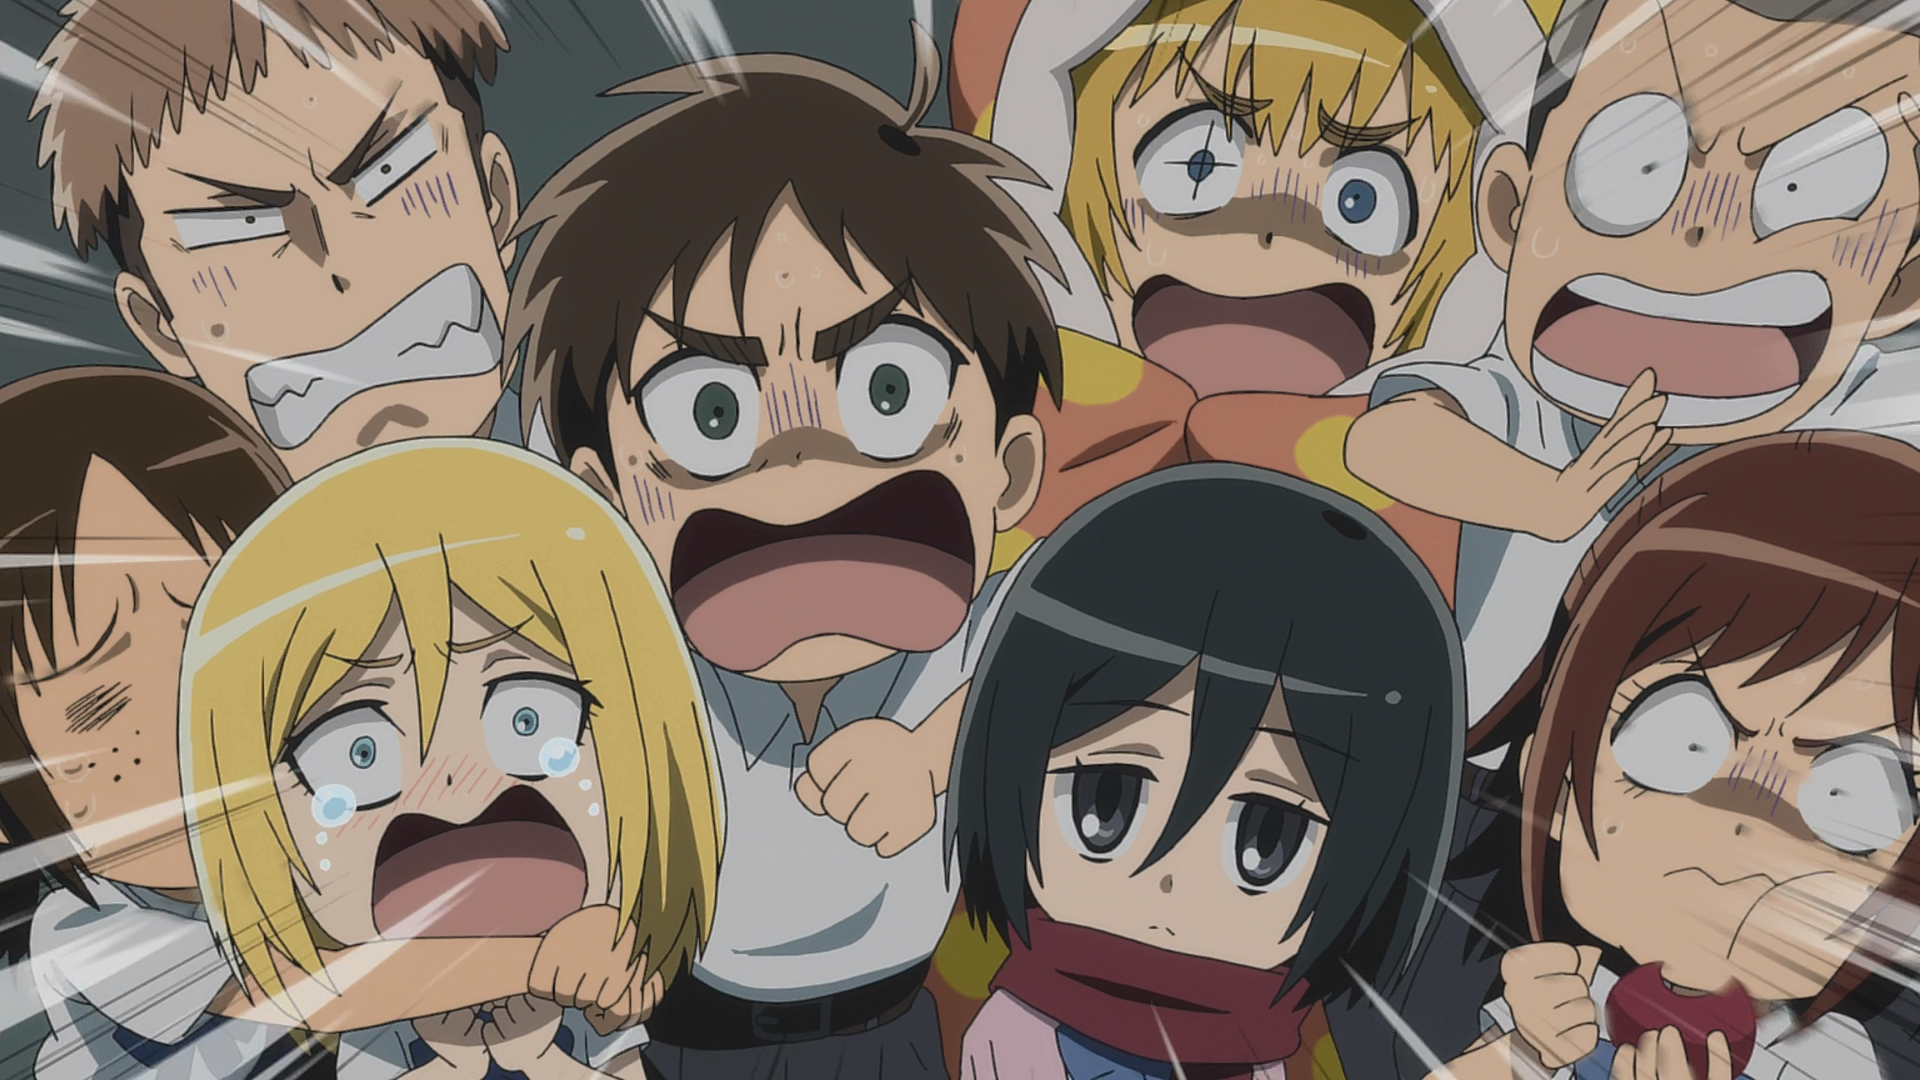 Terrified faces. Attack on titan, Attack on titan art, Attack on titan anime